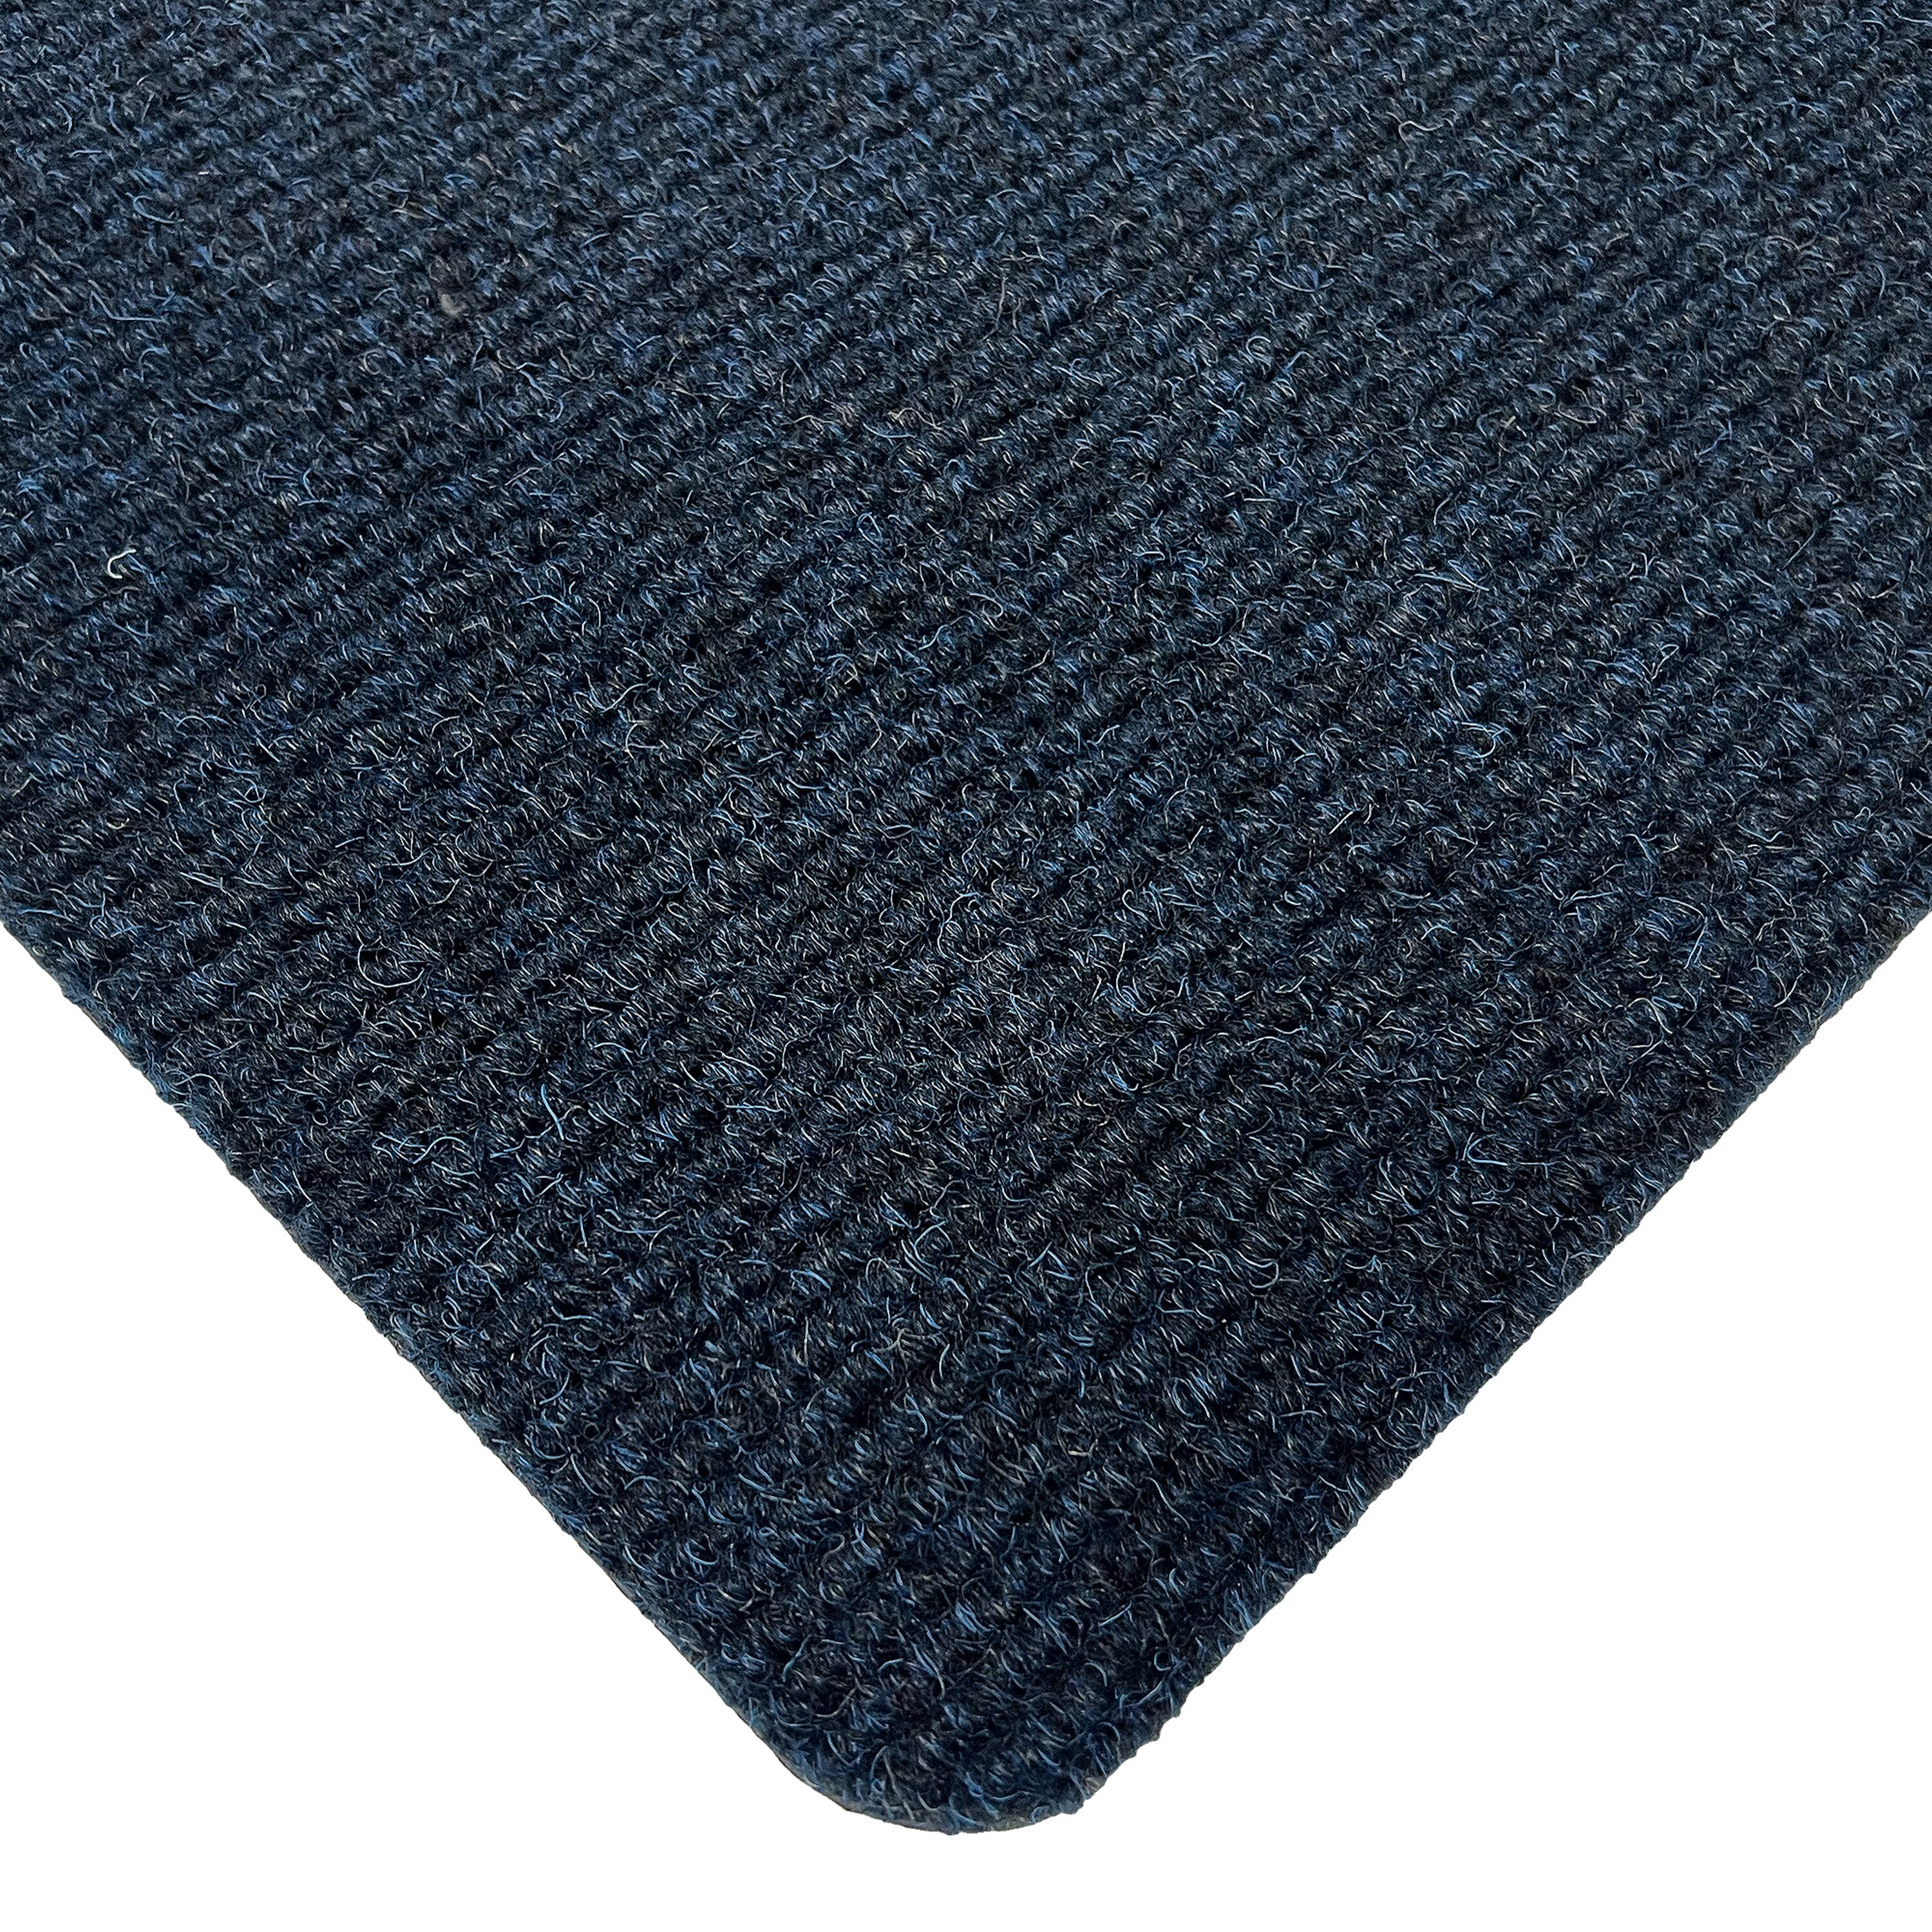 Modrá vstupní rohož (metráž) FLOMA Mega Rib - délka 1 cm, šířka 100 cm, výška 1,3 cm